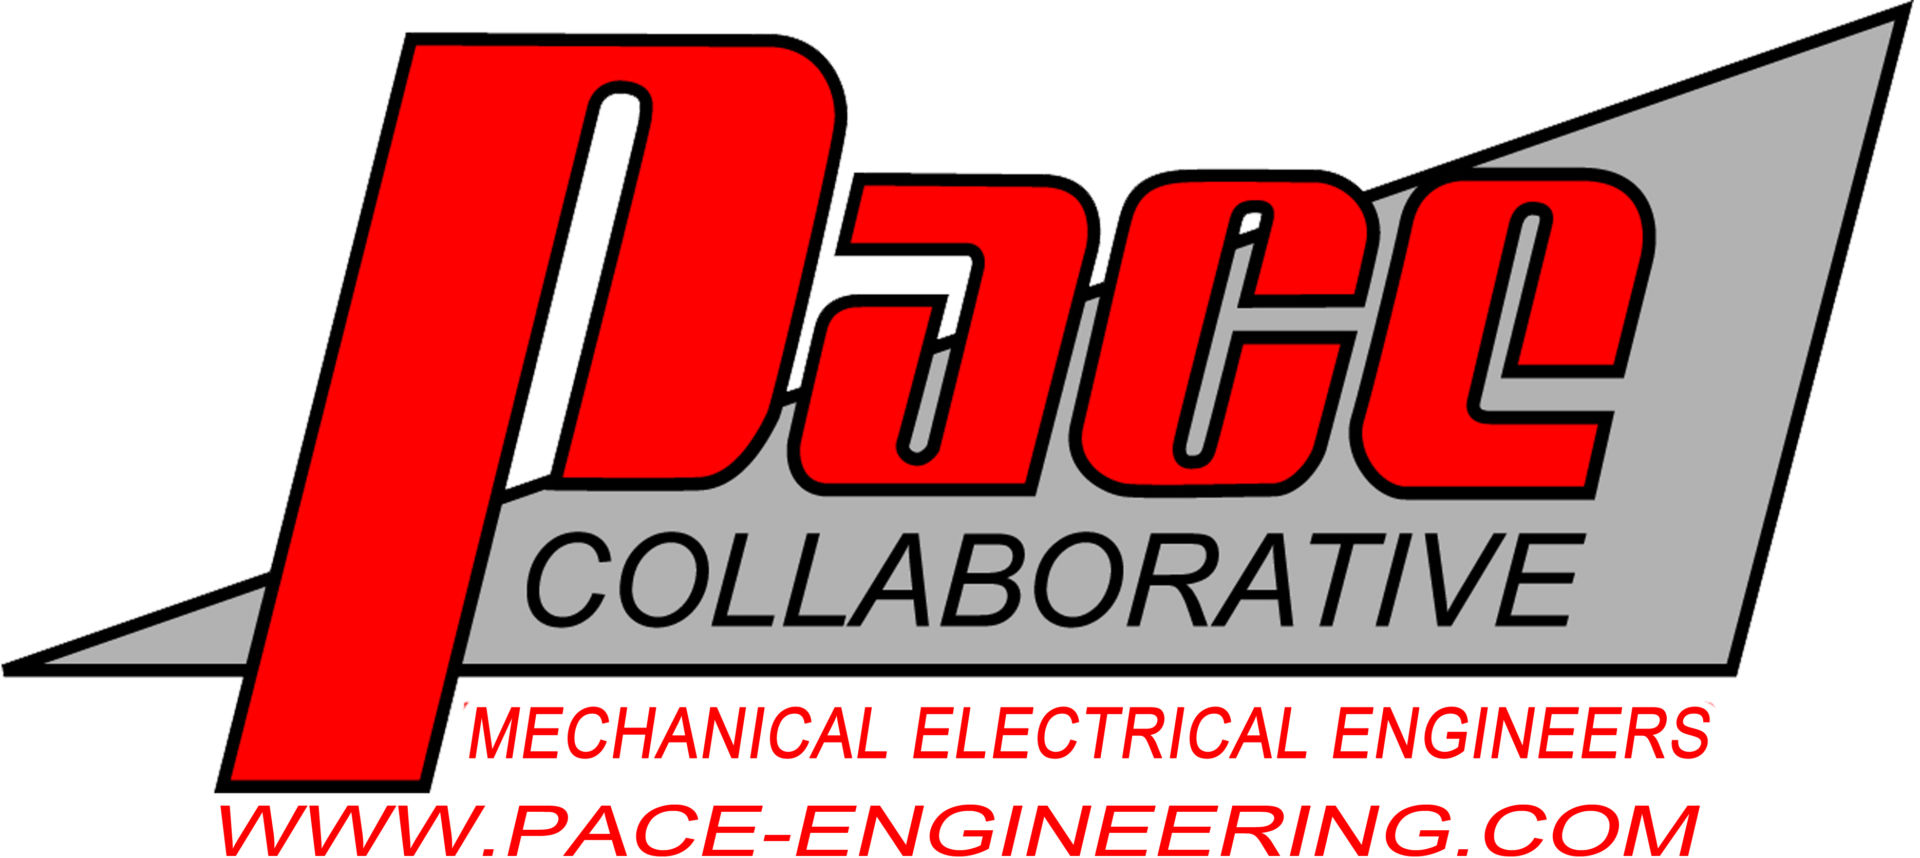 Pace Collaborative logo